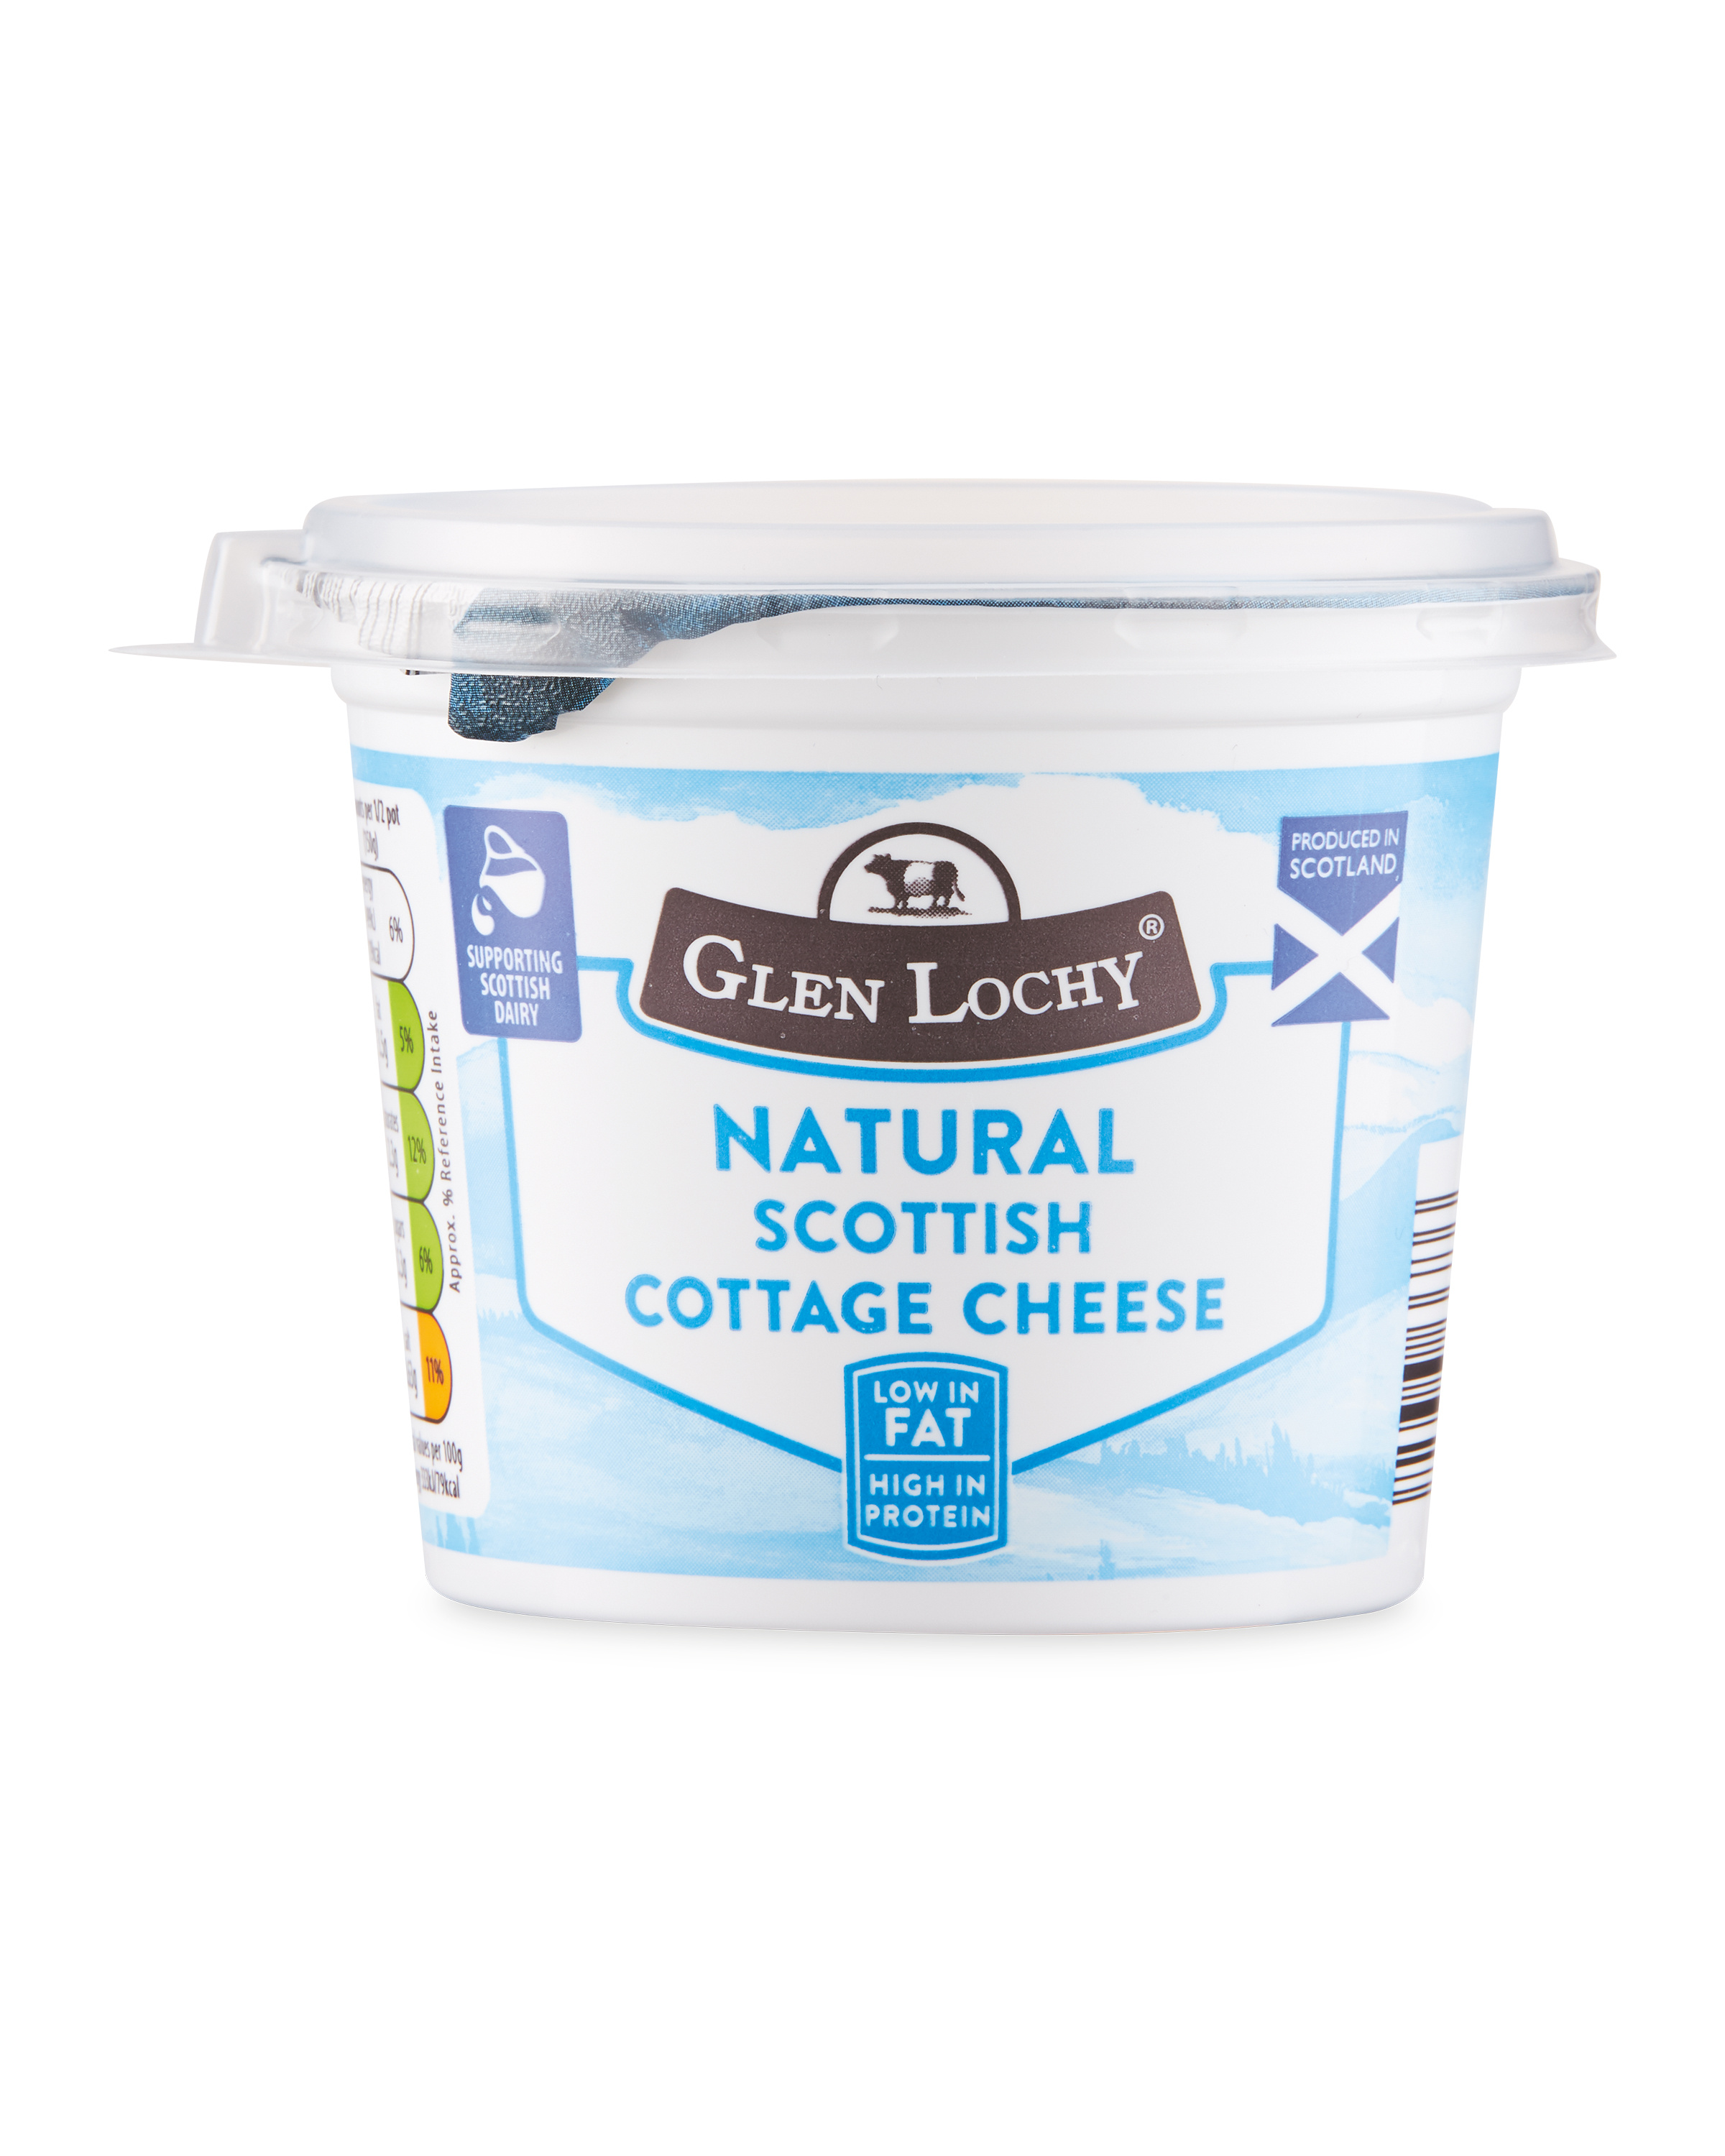 Natural Scottish Cottage Cheese Aldi Uk